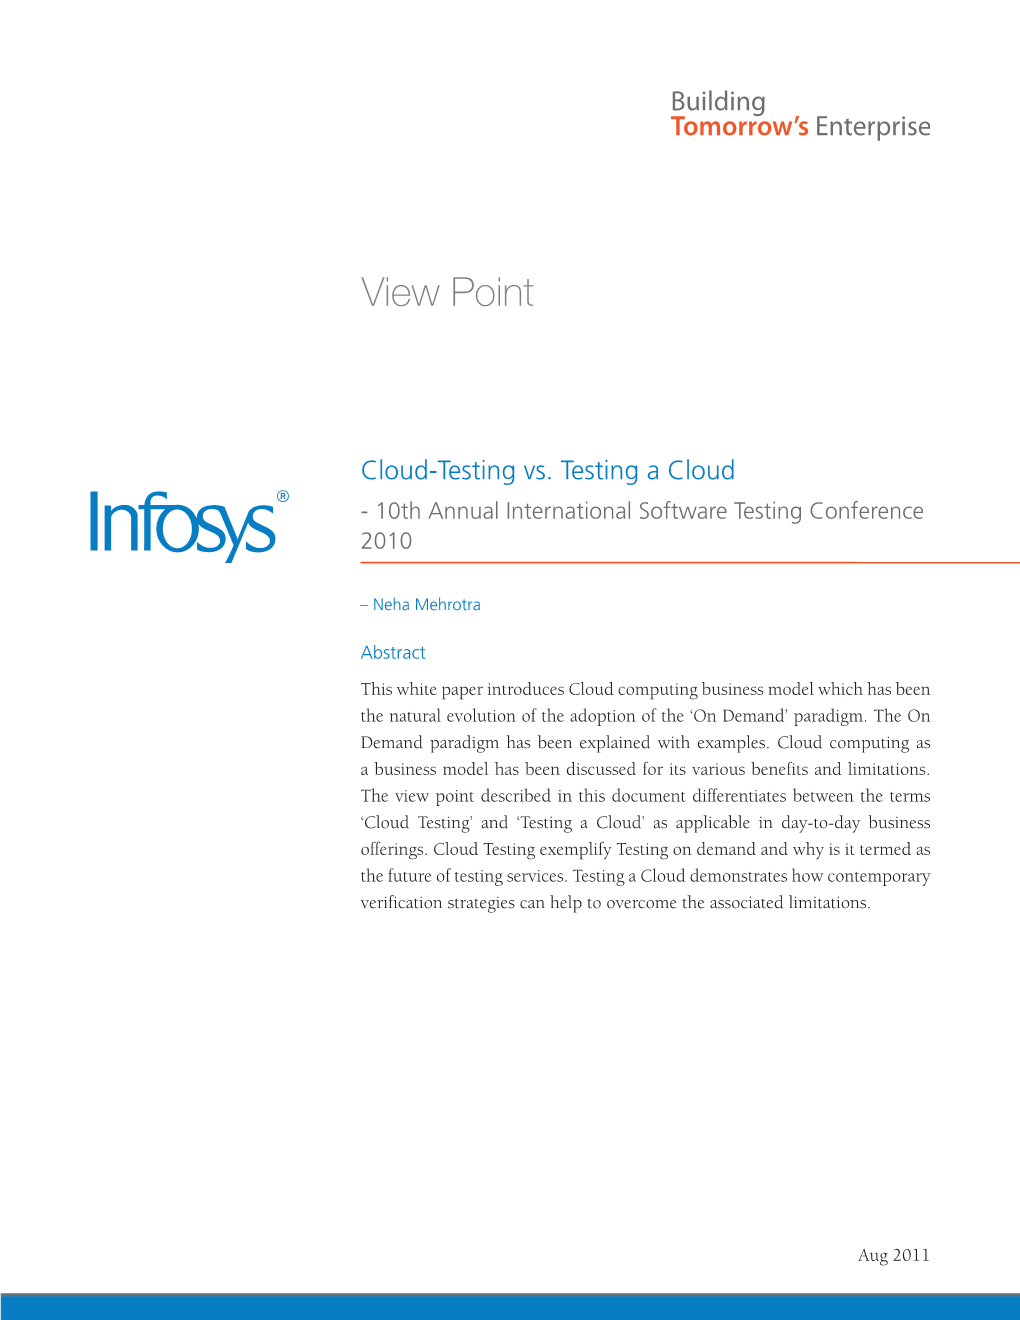 Cloud-Testing V/S Testing-Cloud